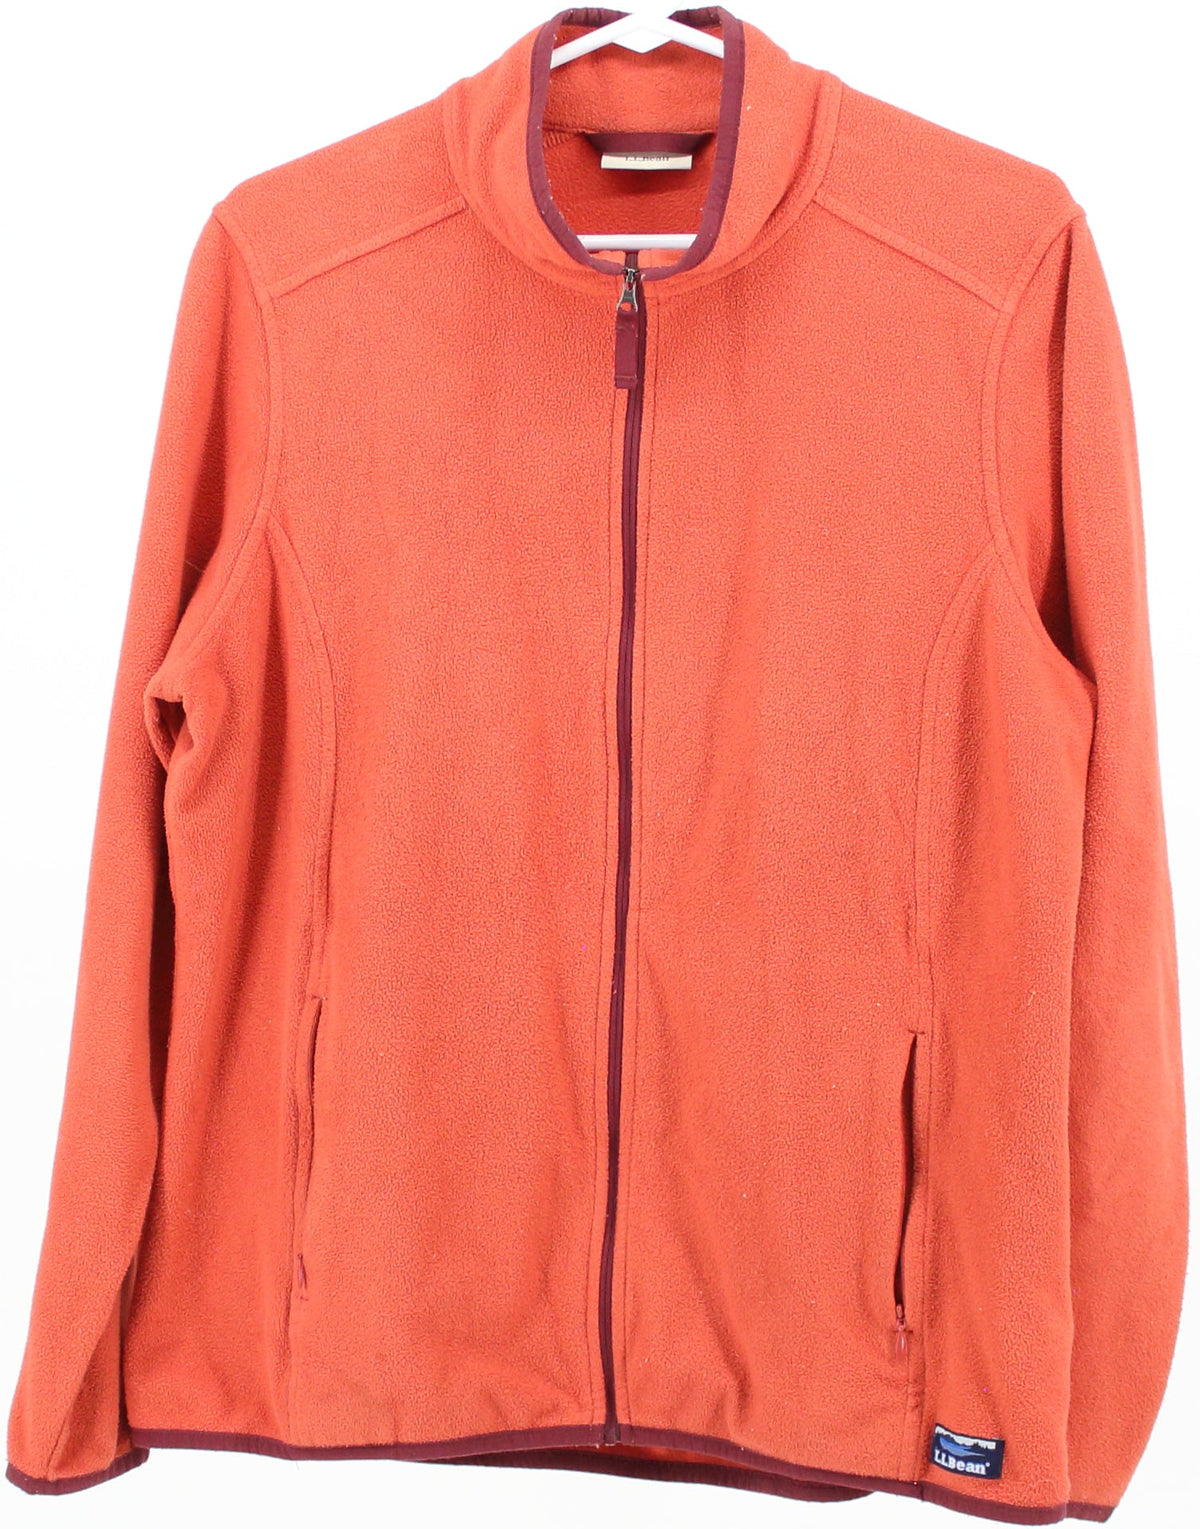 L.L.Bean Orange Fleece Jacket With Burgundy Details